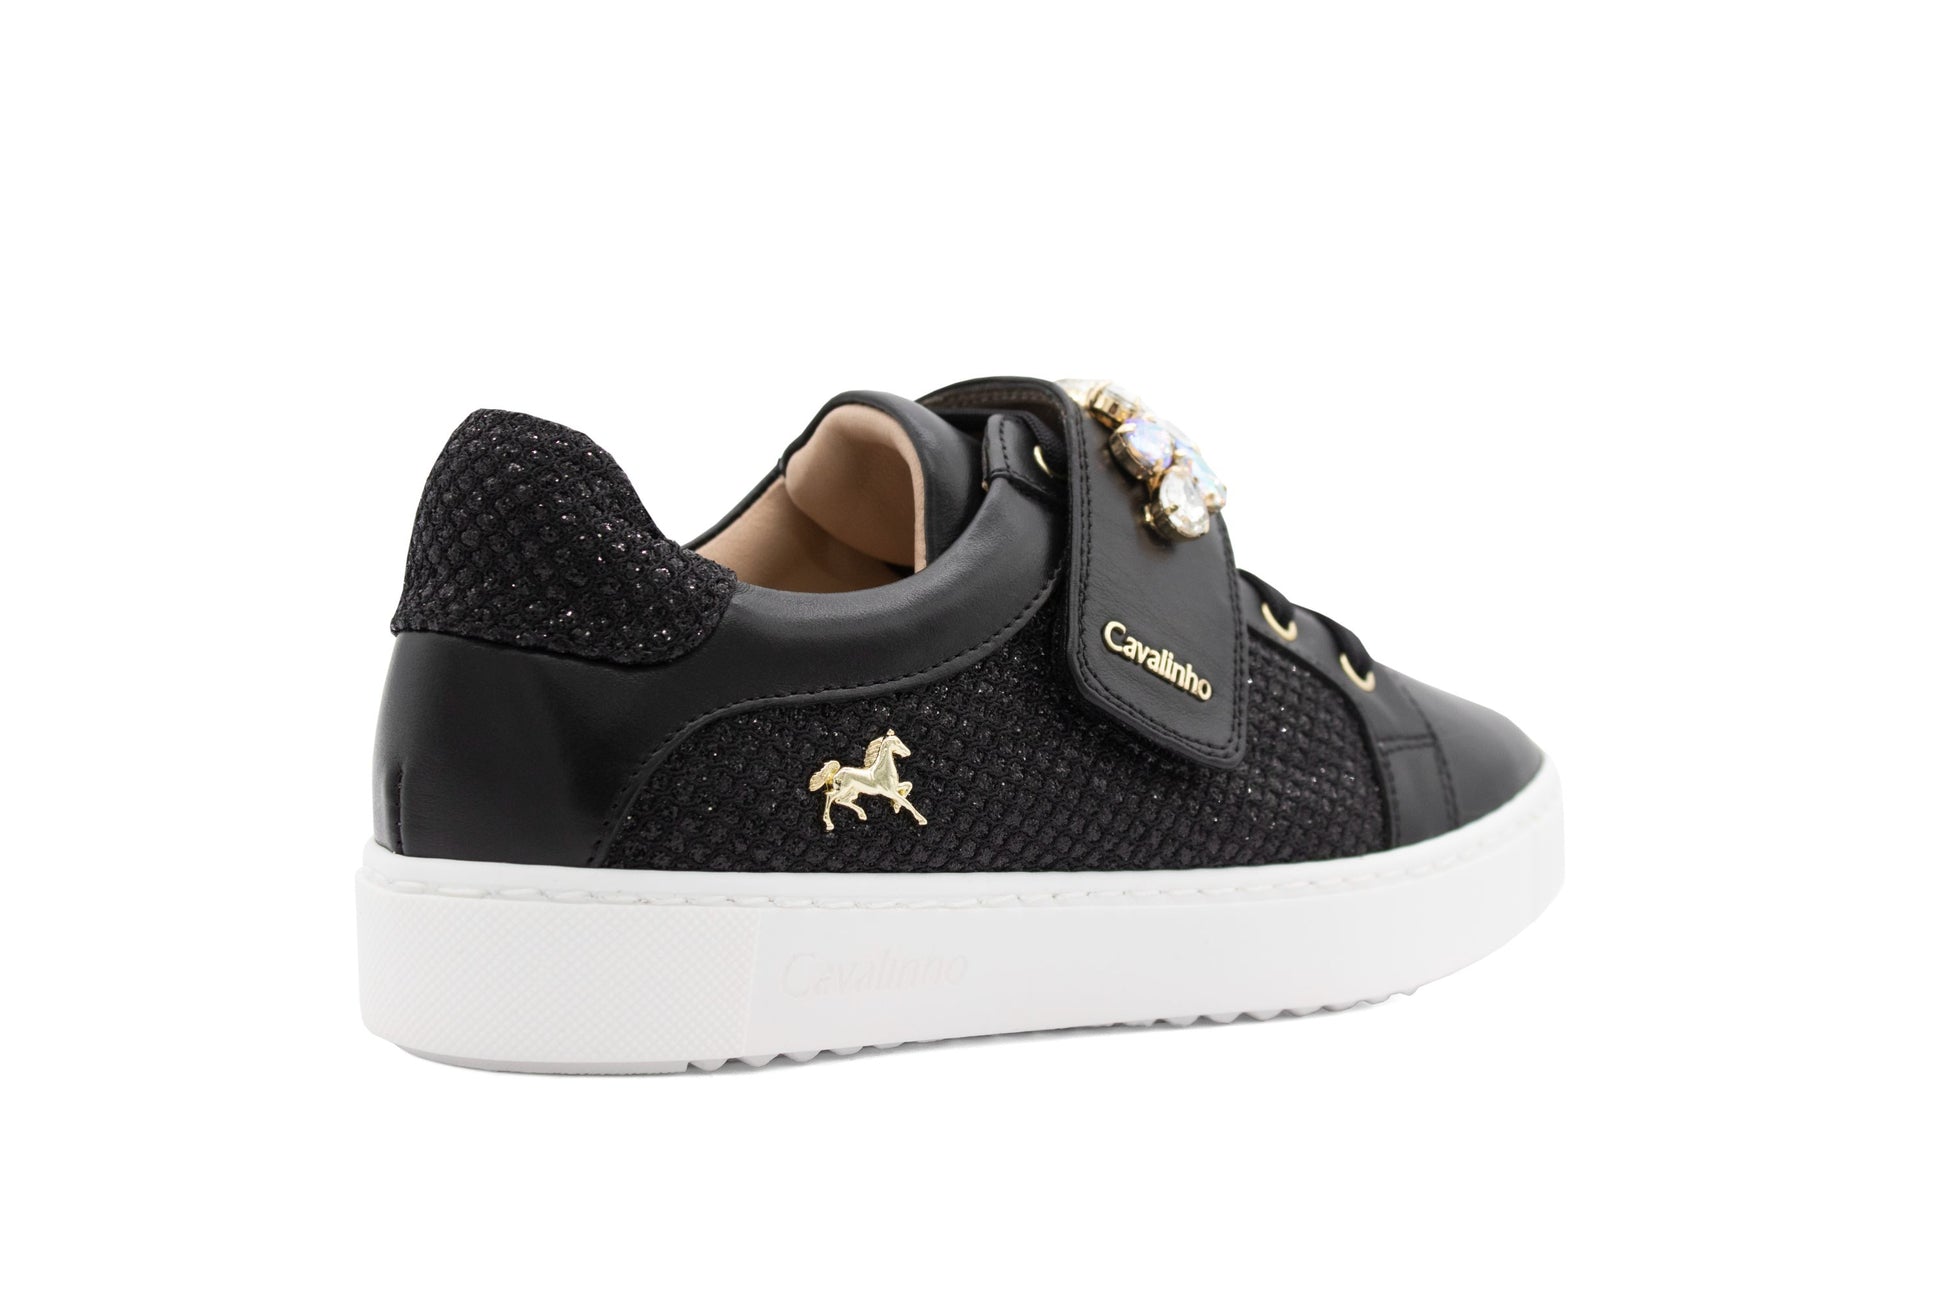 Cavalinho Bright Sneakers - Size 10 & 11 - Black - 48010076.01_3